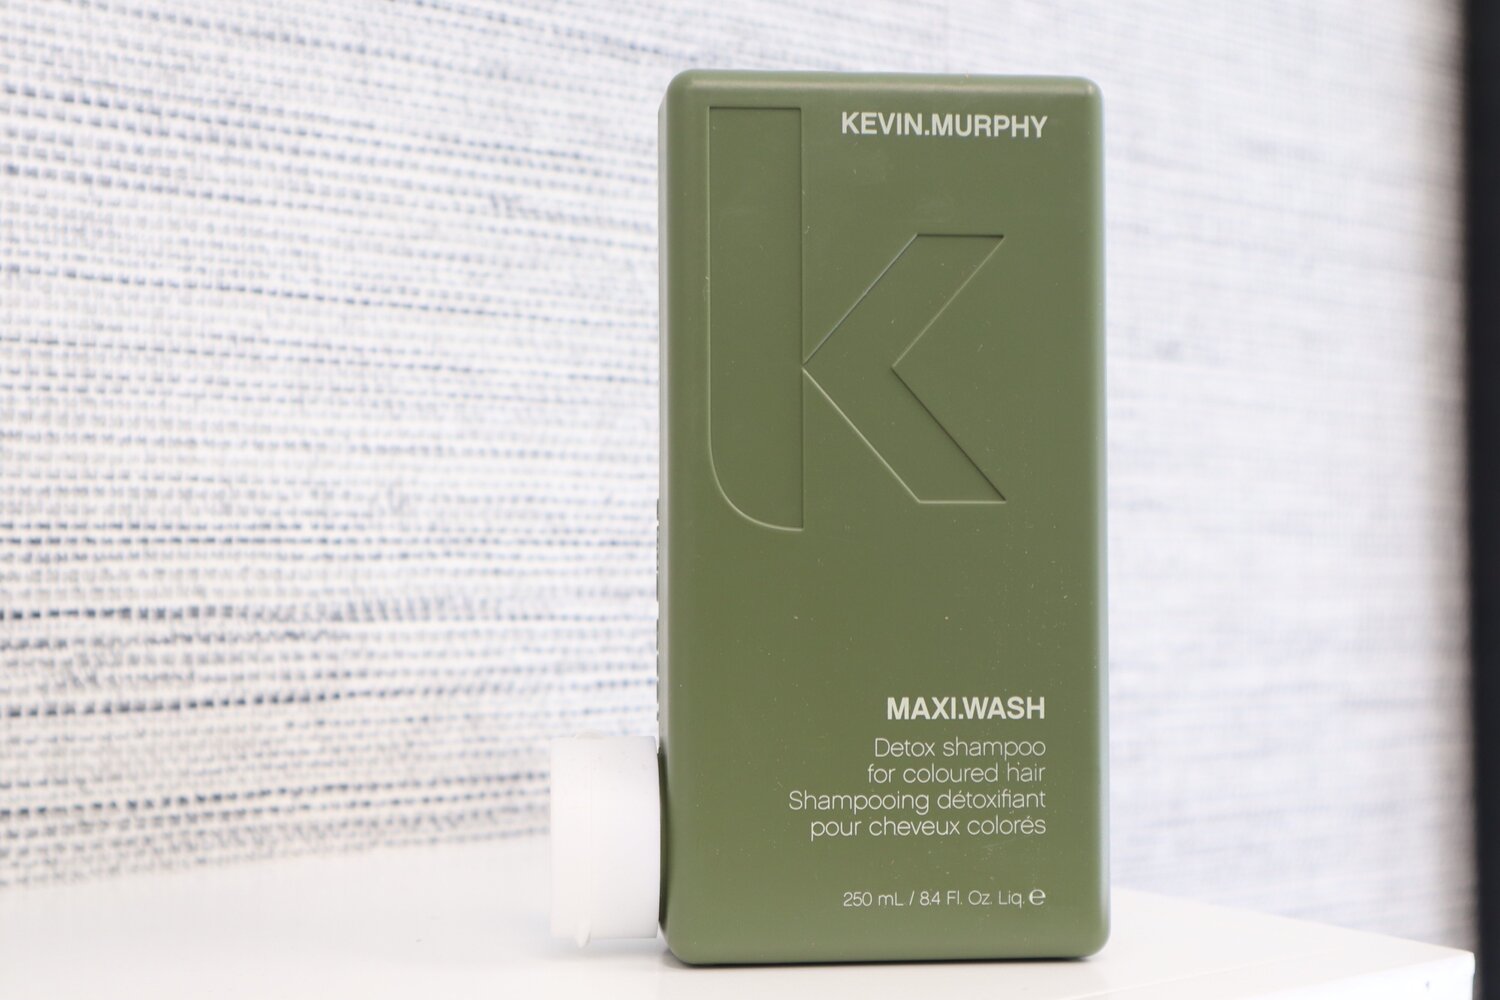 Kevin.Murphy Maxi.Wash - Detoxifying Shampoo for Colored Hair